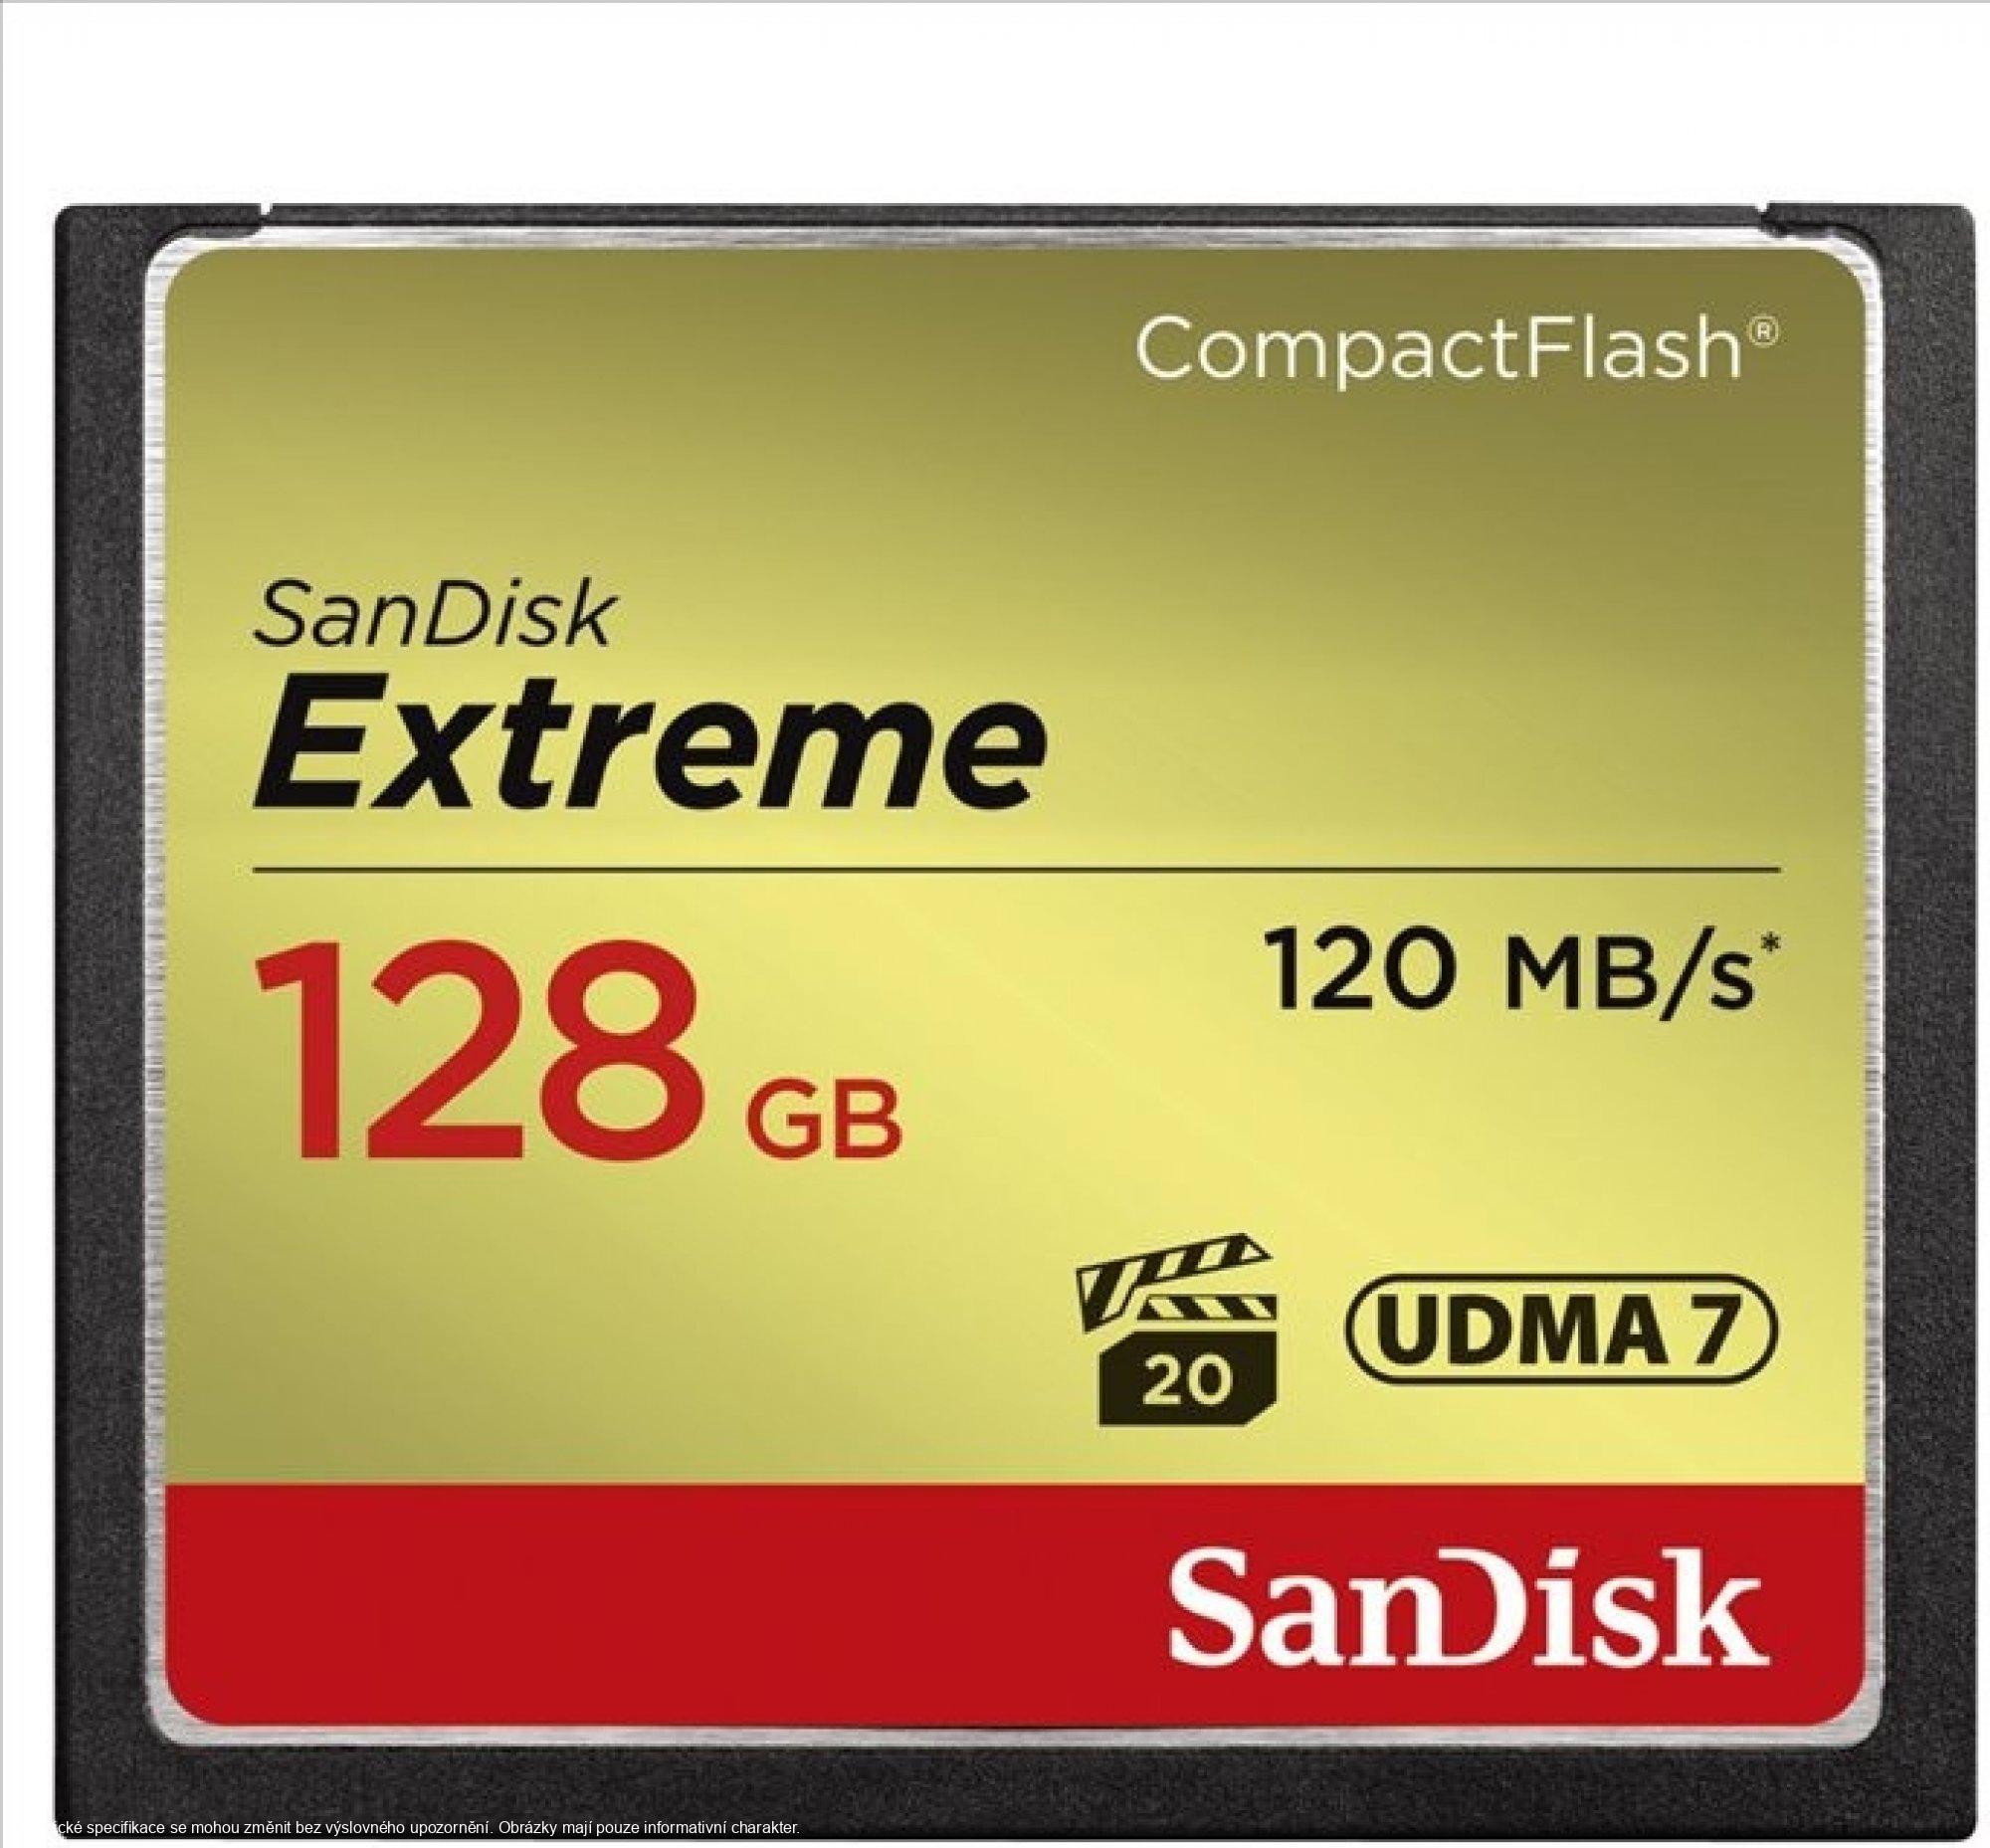 SanDisk Extreme CompactFlash 128GB UDMA7 SDCFXSB-128G-G46